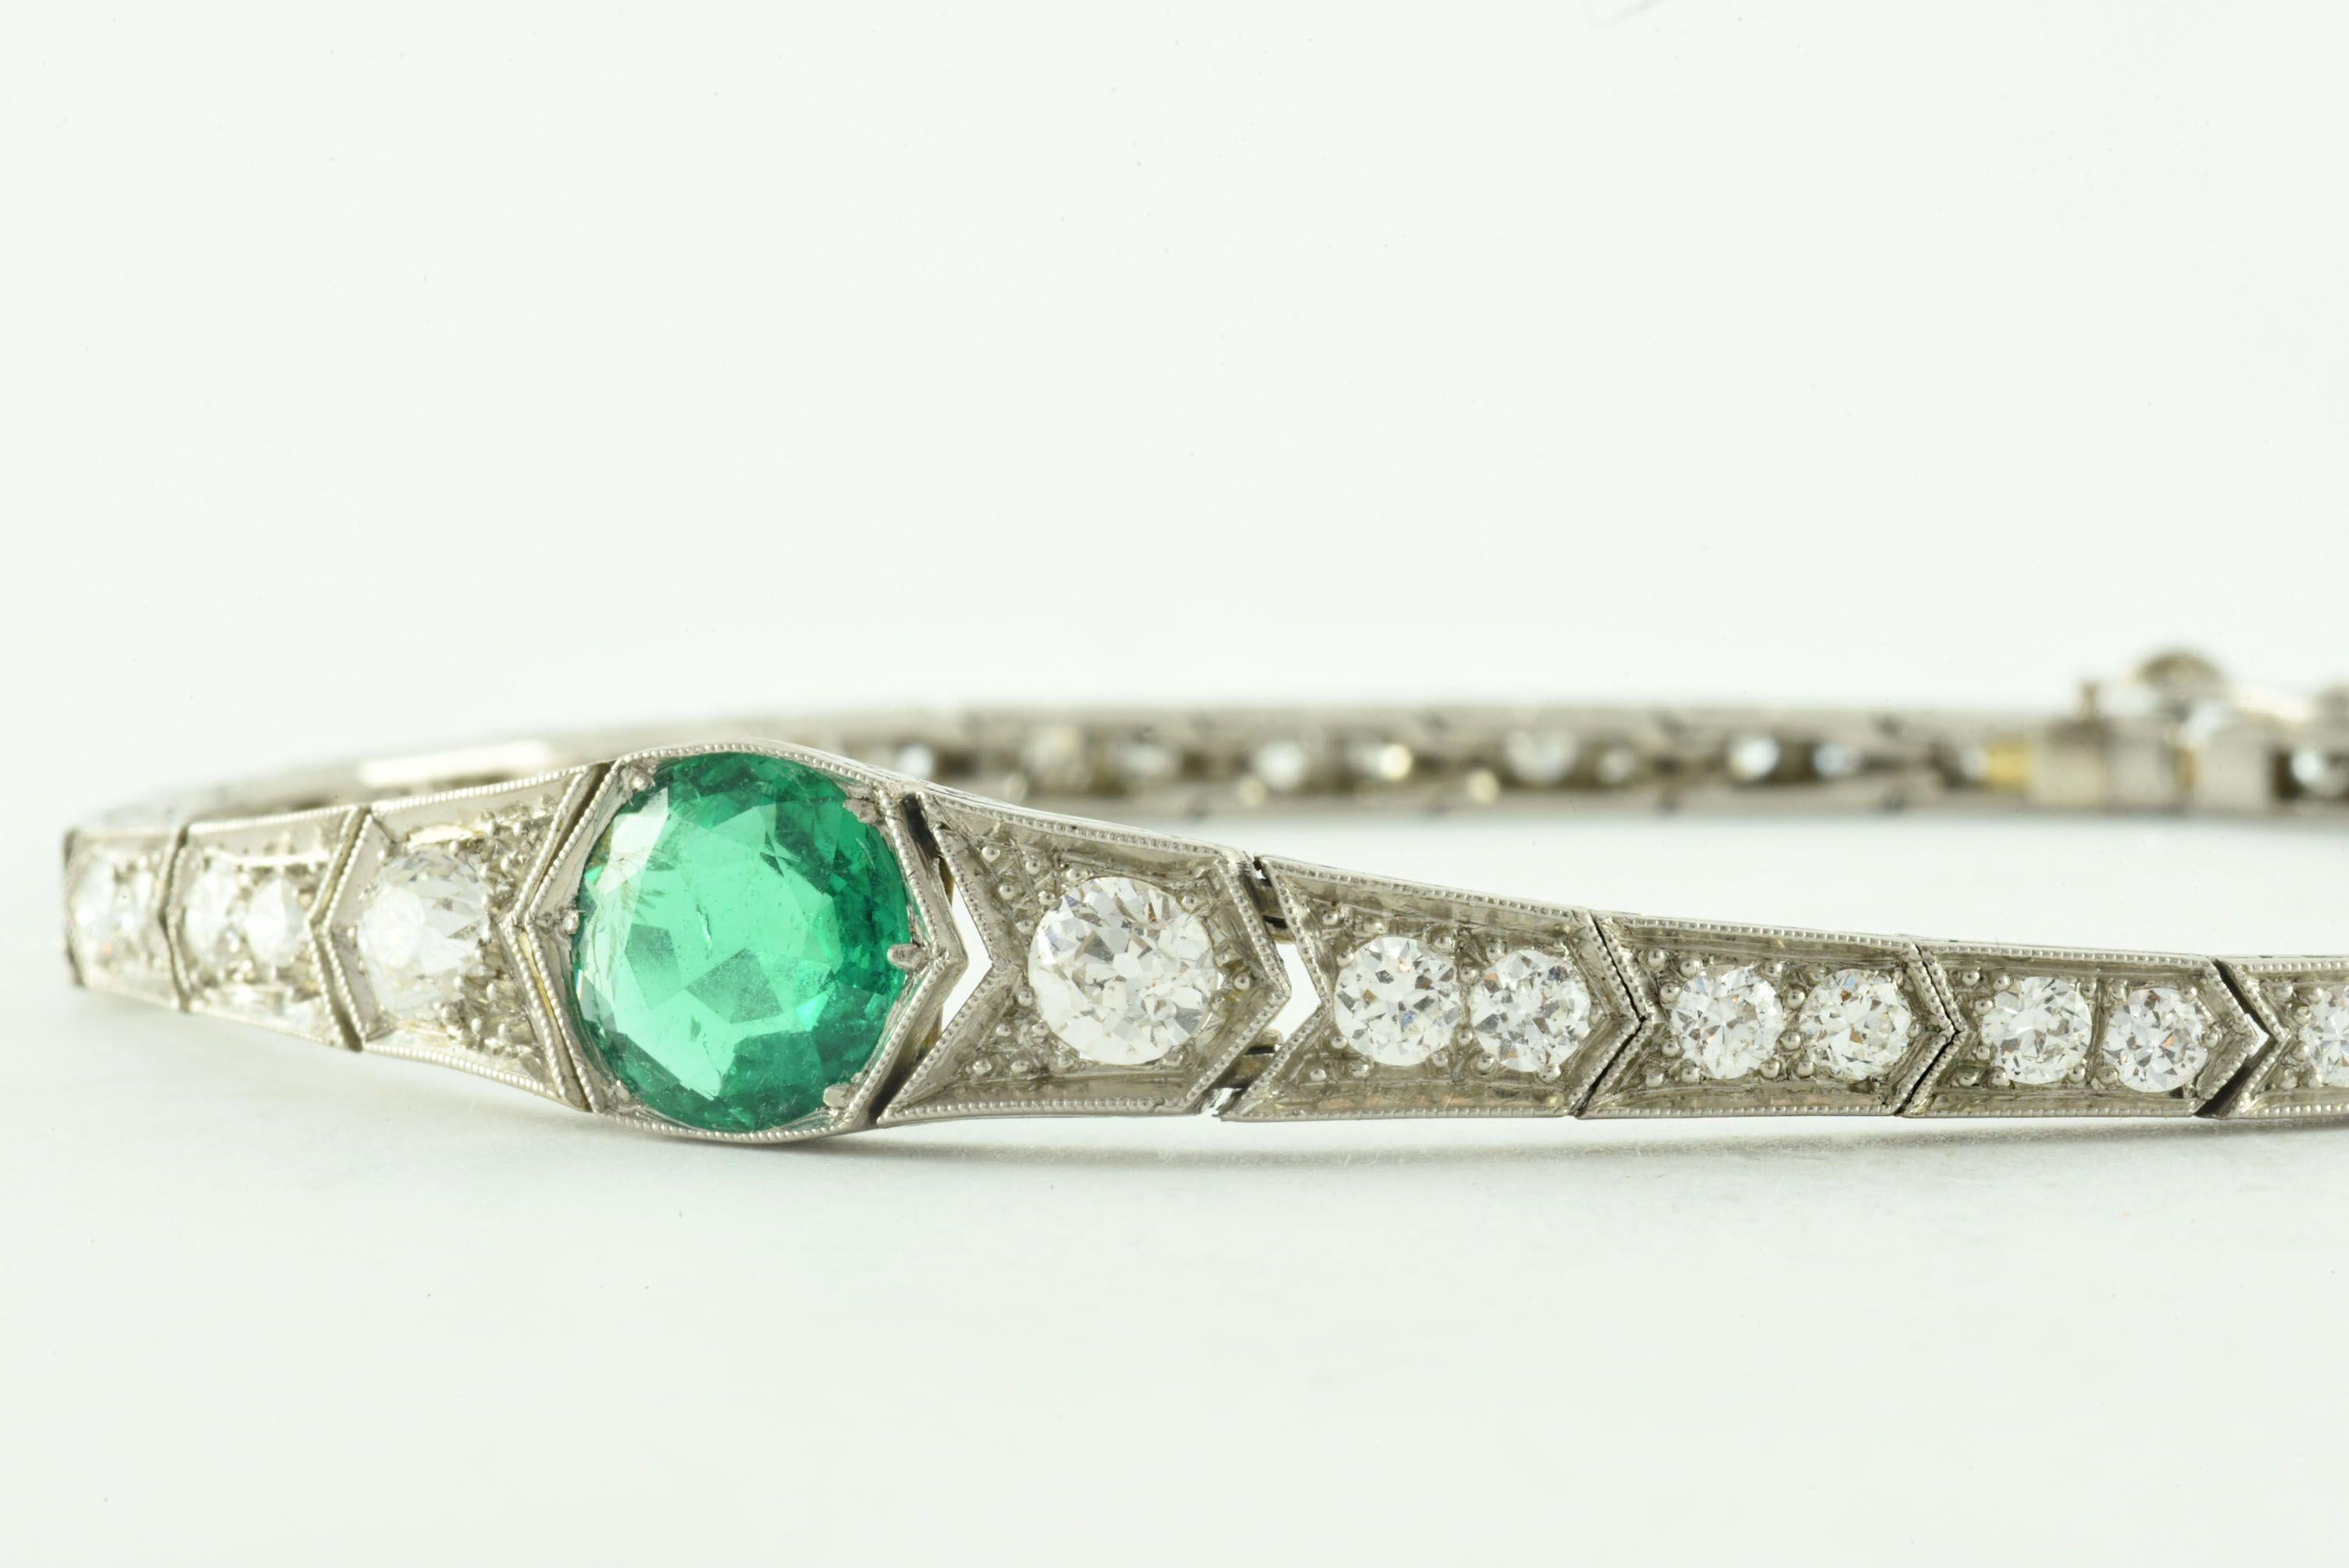 Old European Cut GIA Certified Art Deco Colombian Green Emerald and Diamond Bracelet